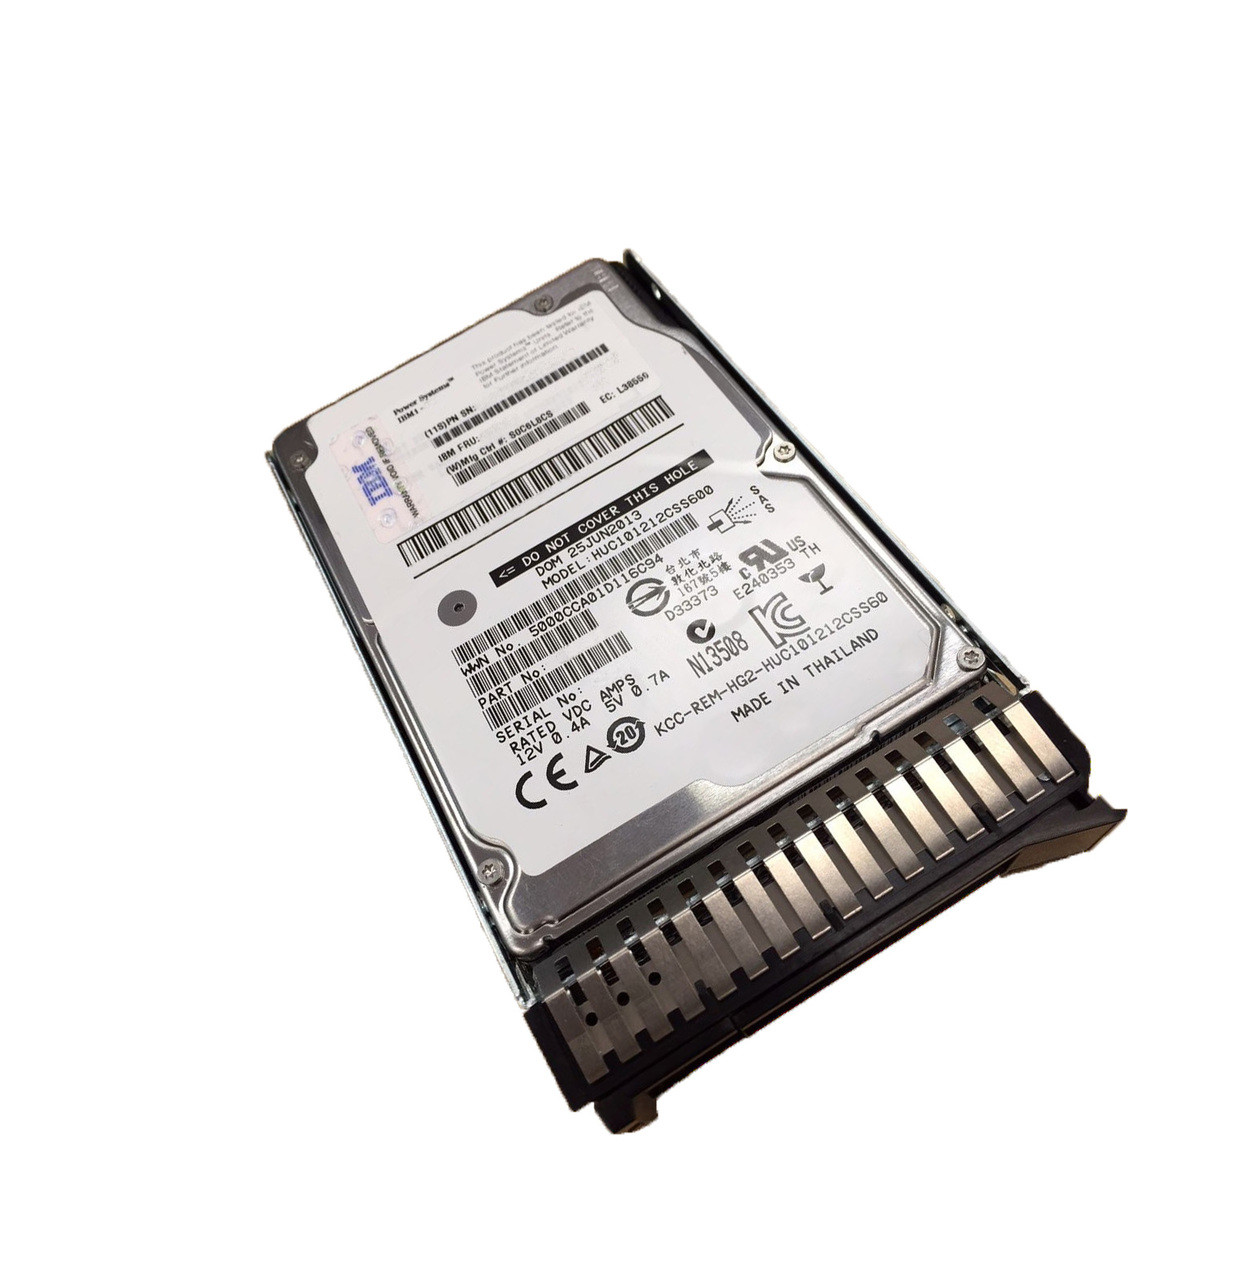 IBM 300GB 10K SCSI HDDRefurbished, 03N6335RRefurbished